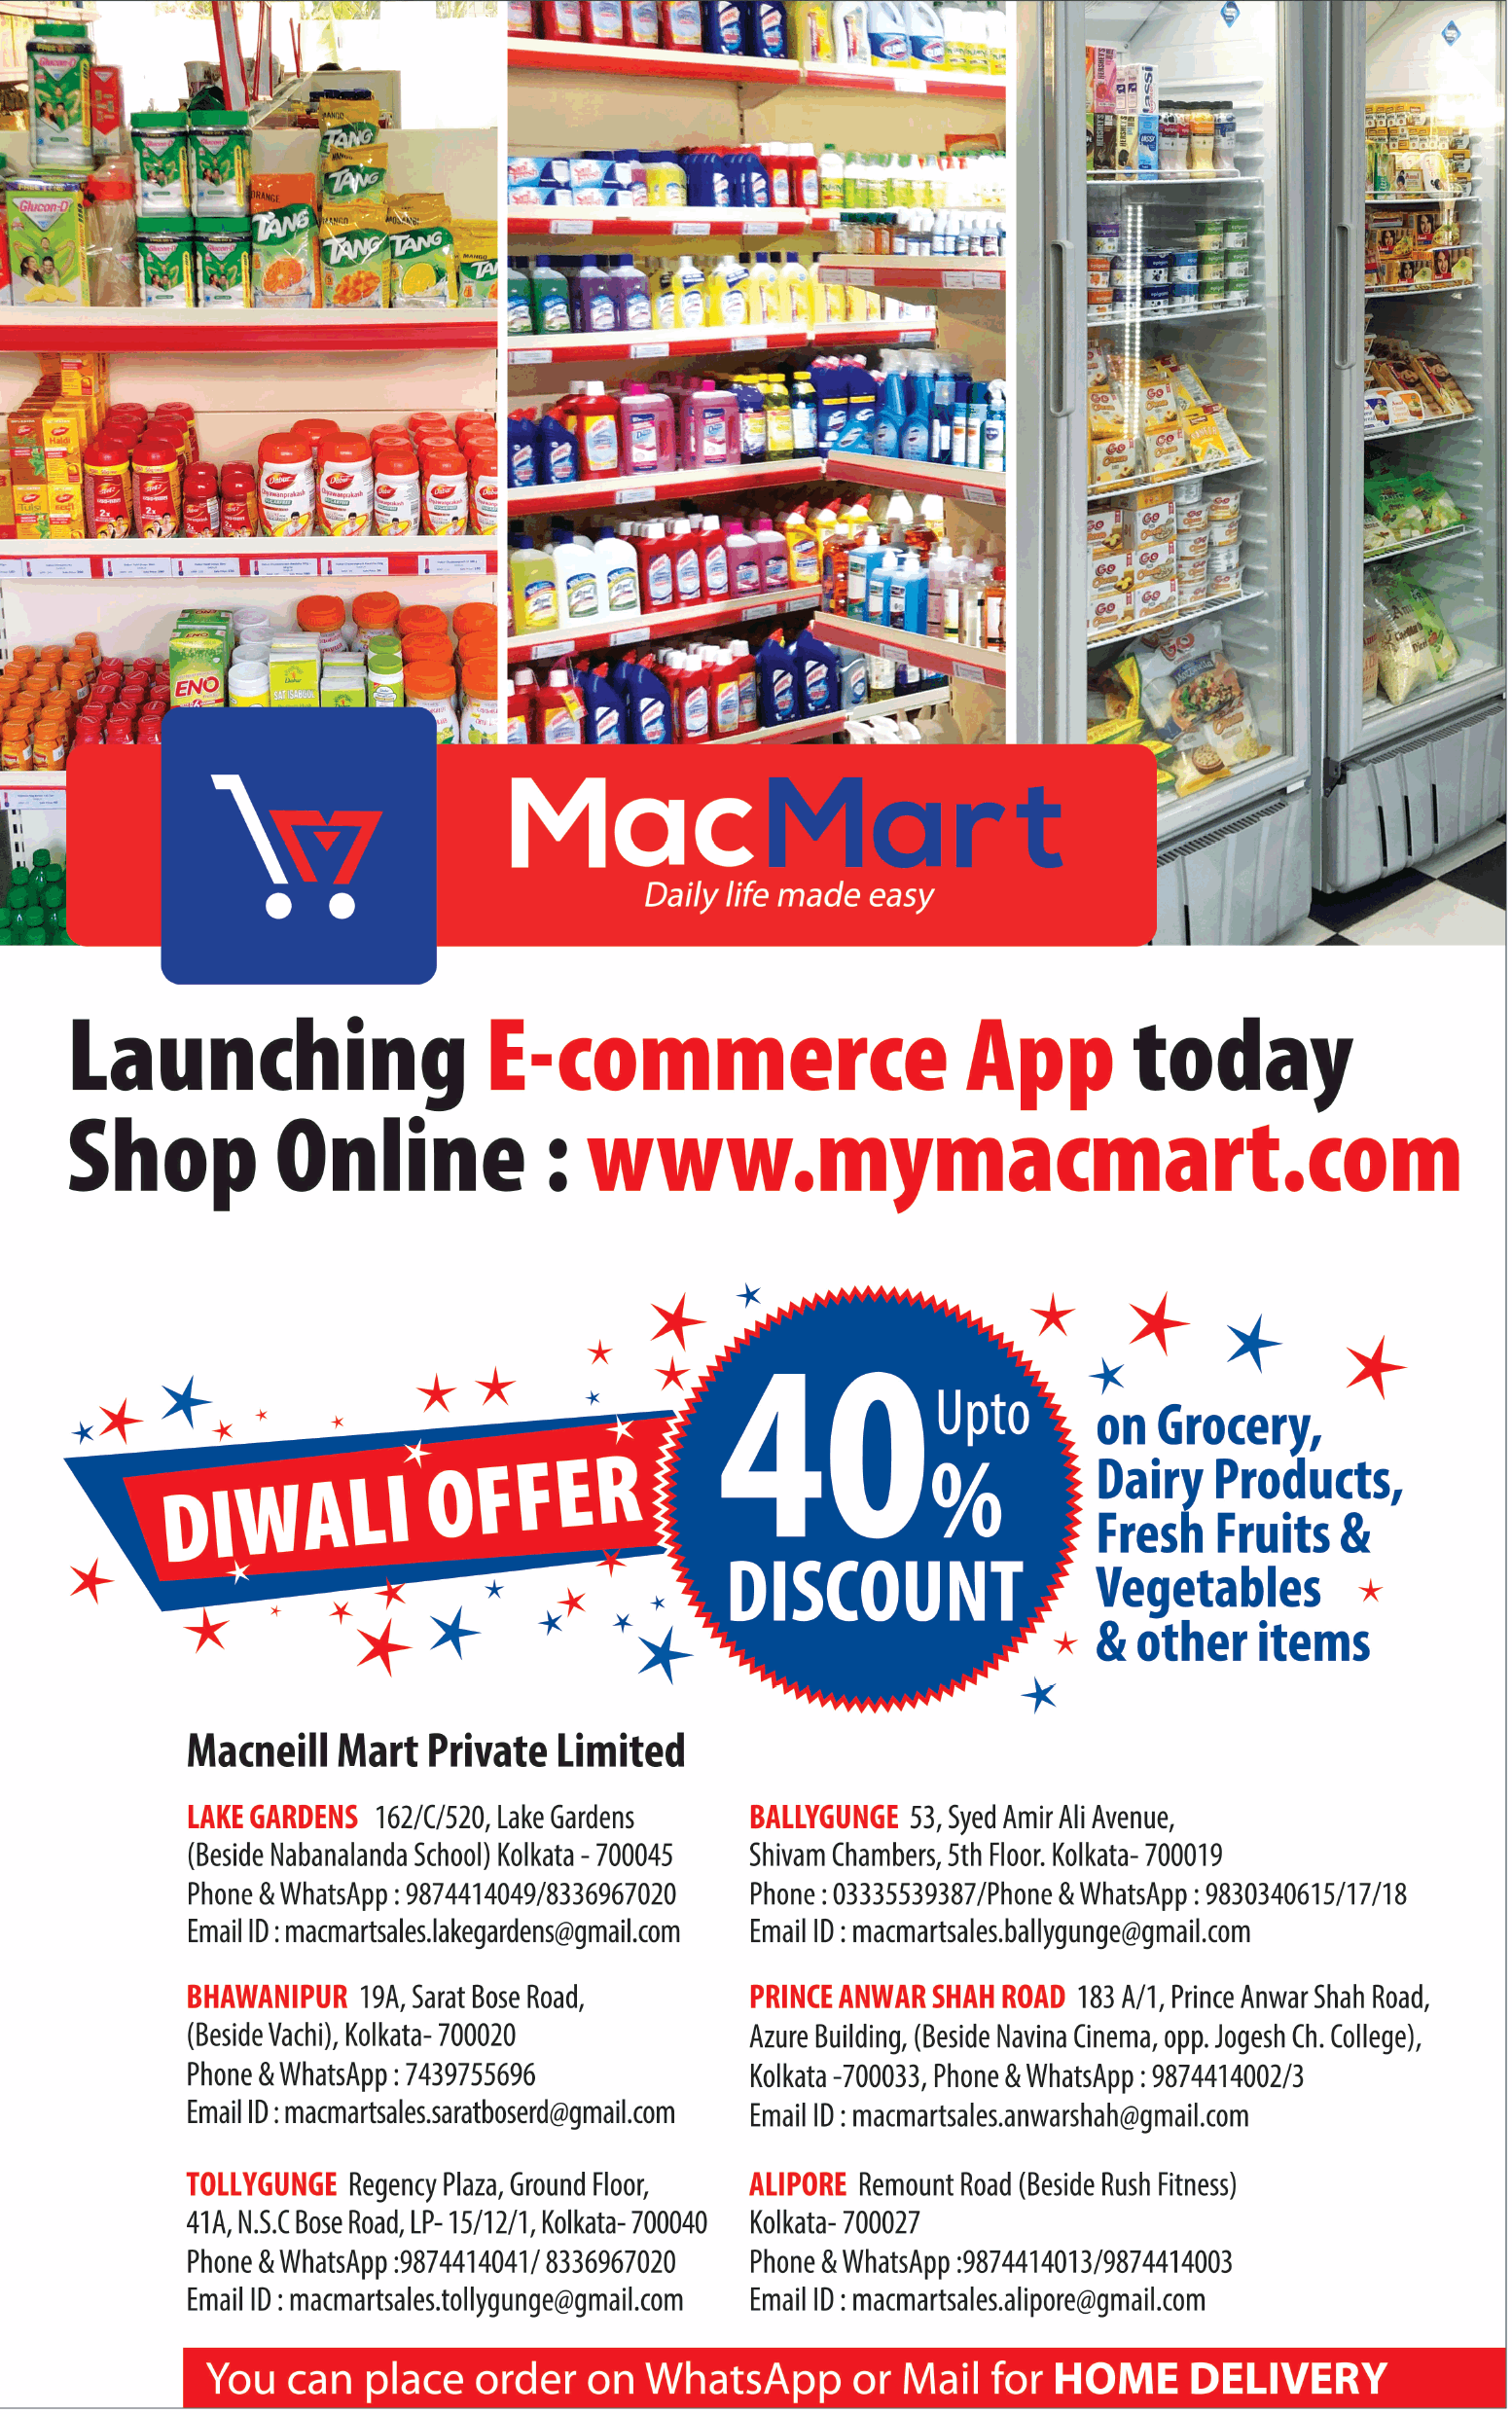 macmart-launching-e-commerce-app-today-diwali-offer-40%-discount-ad-toi-kolkata-14-11-2020